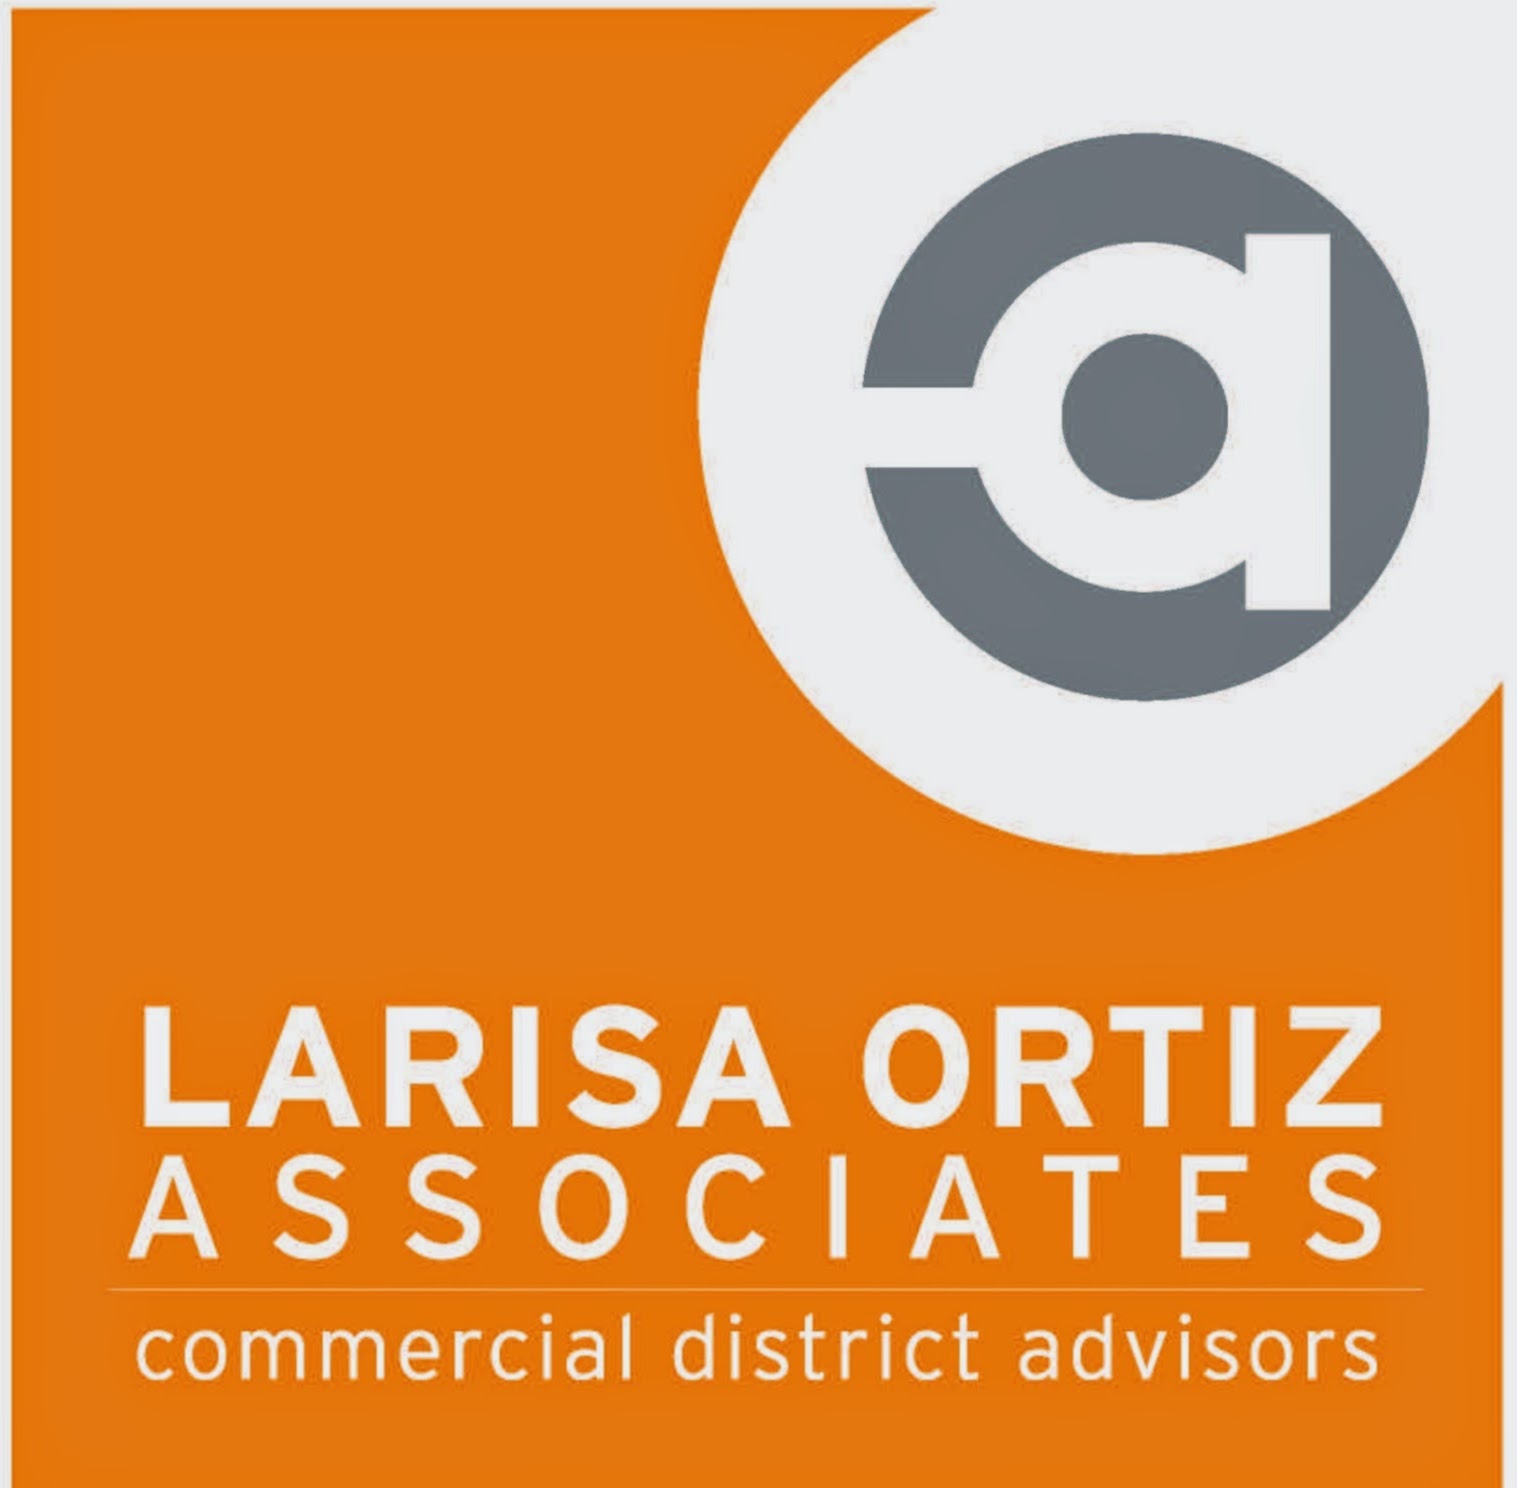 Photo of Larisa Ortiz Associates in Queens City, New York, United States - 3 Picture of Point of interest, Establishment